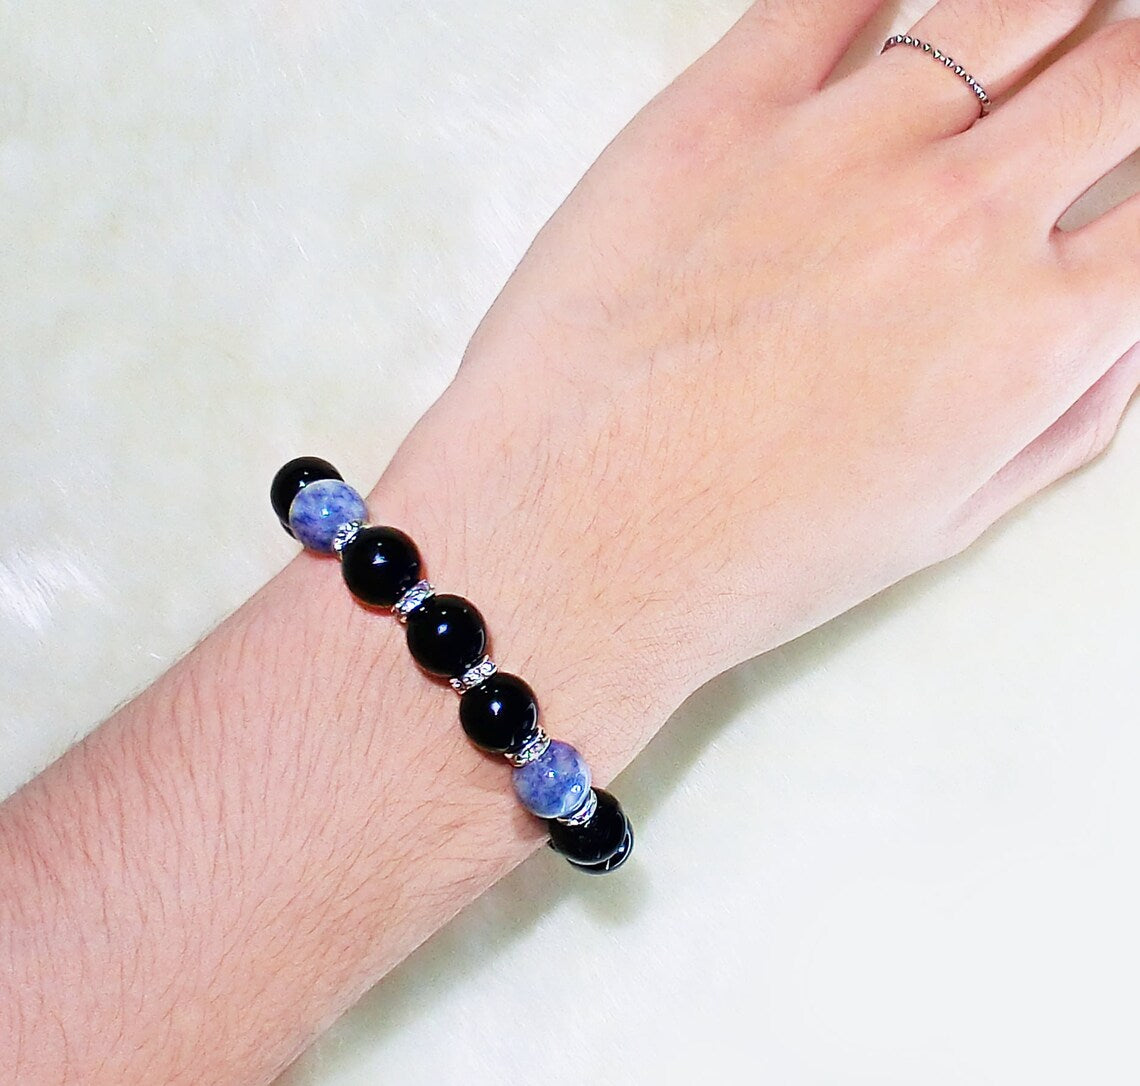 BTS Jungkook VLIVE Inspired Black Blue Wooden Beads Sodalite